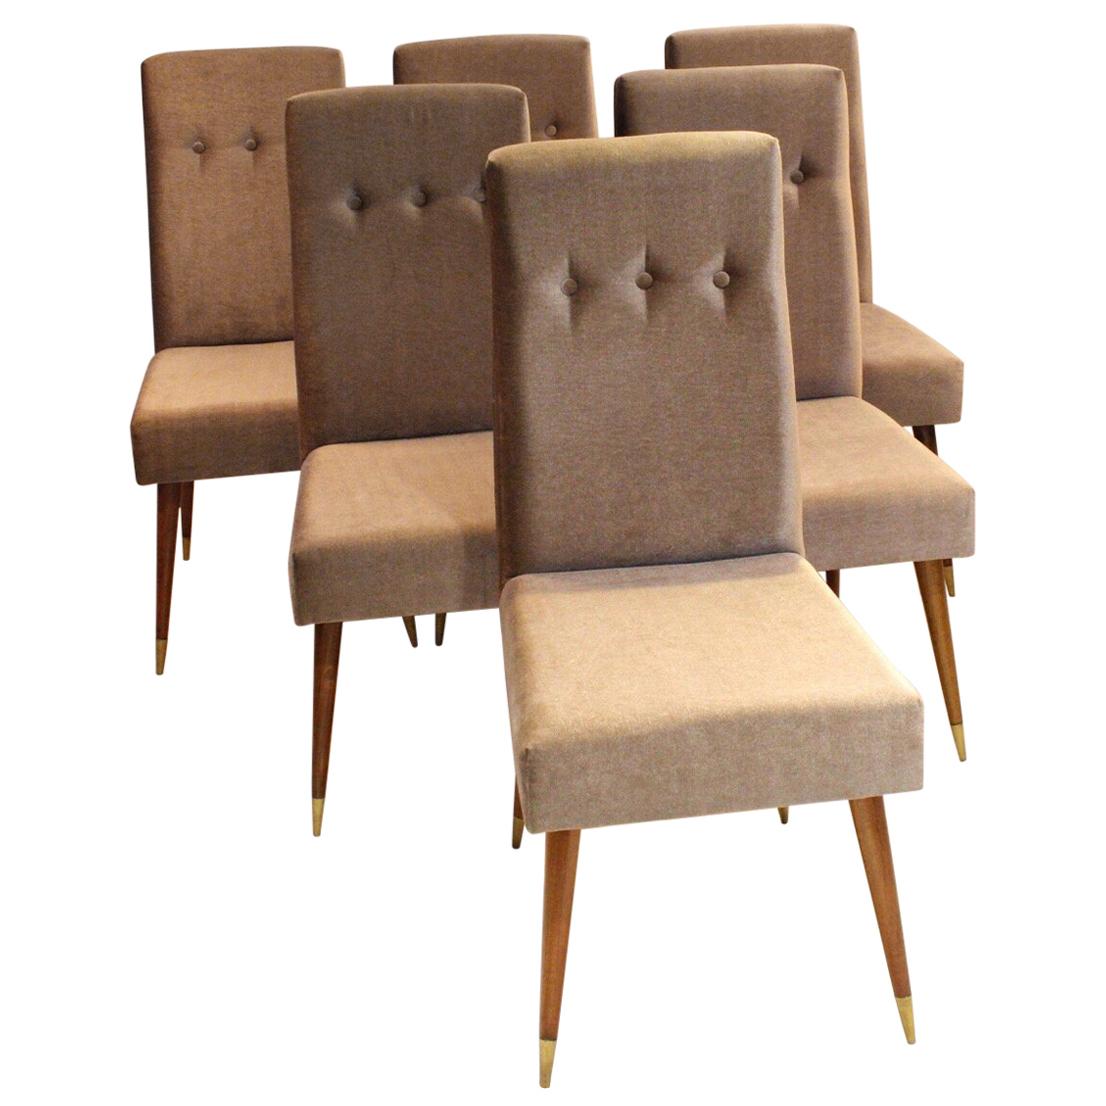 Set of Six Mid-Century Modern Chairs